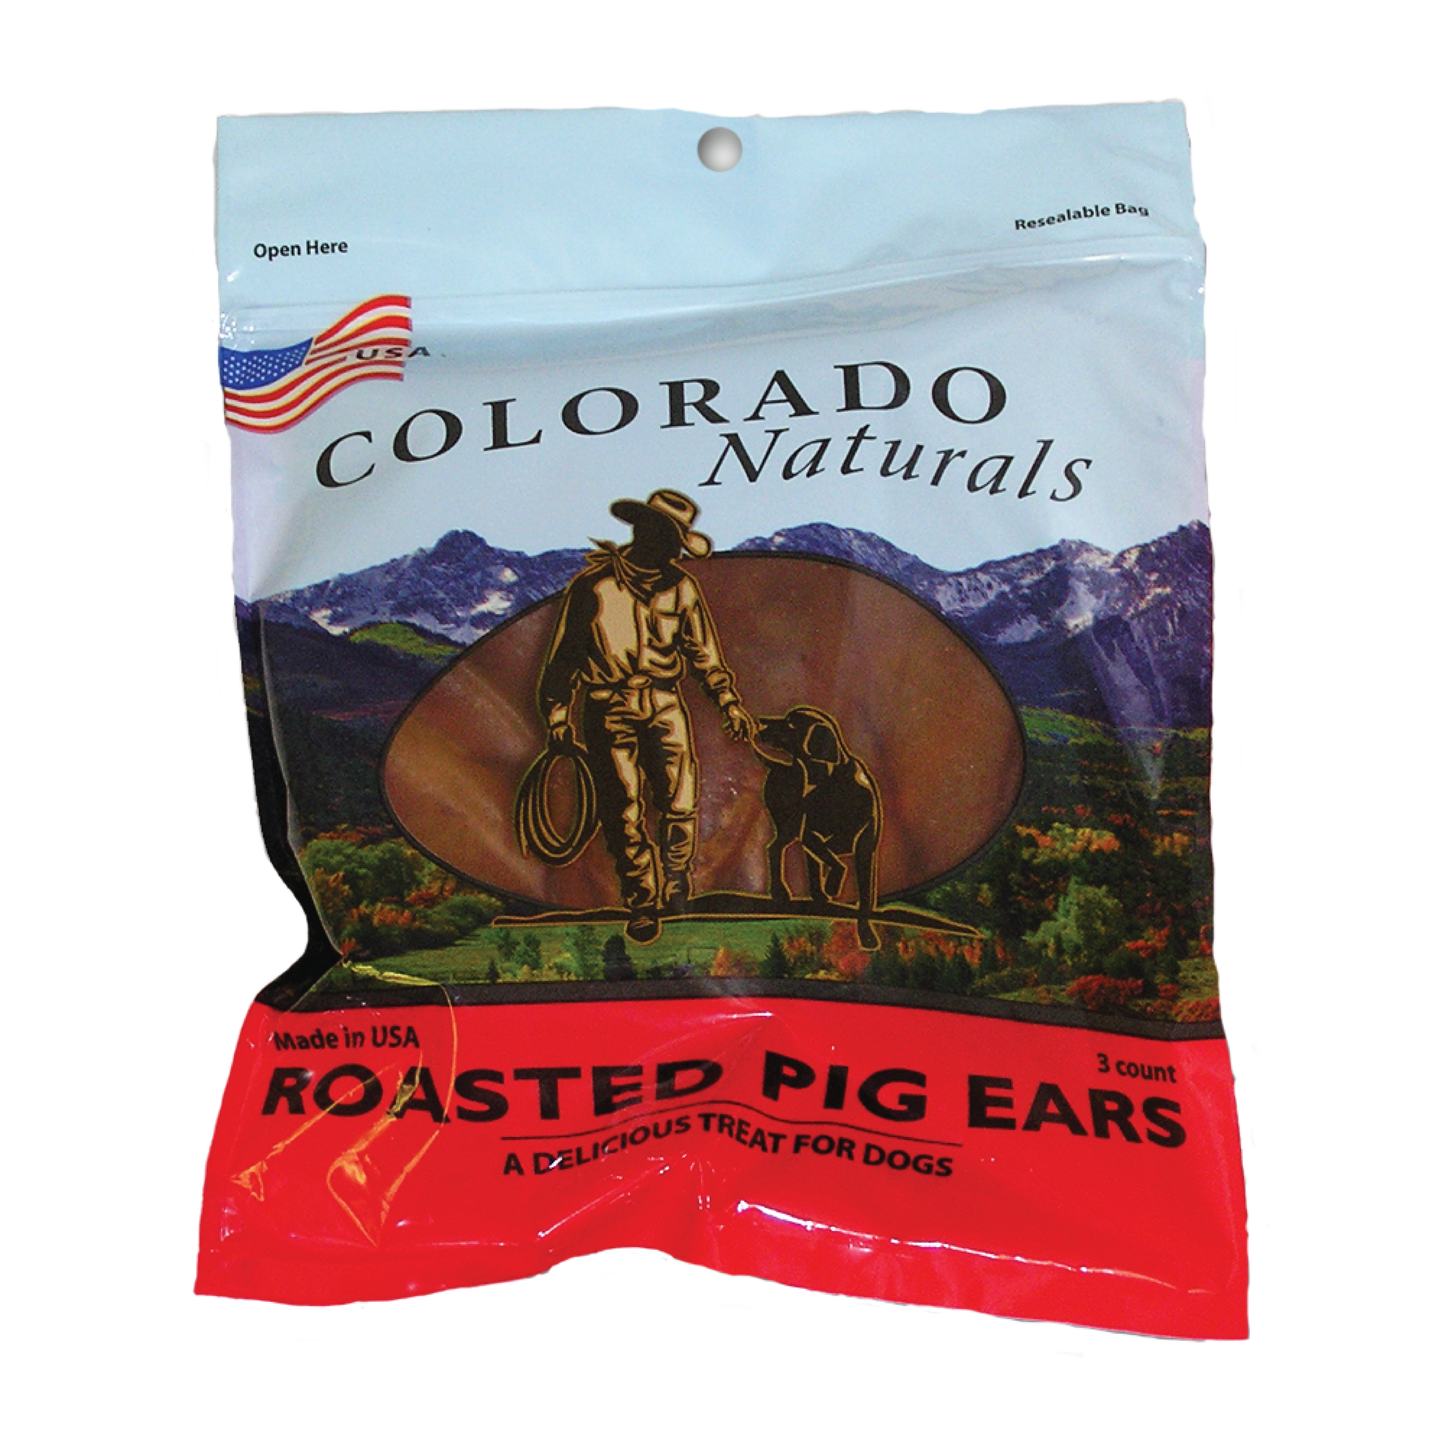 Colorado Naturals All Natural Pig Ears